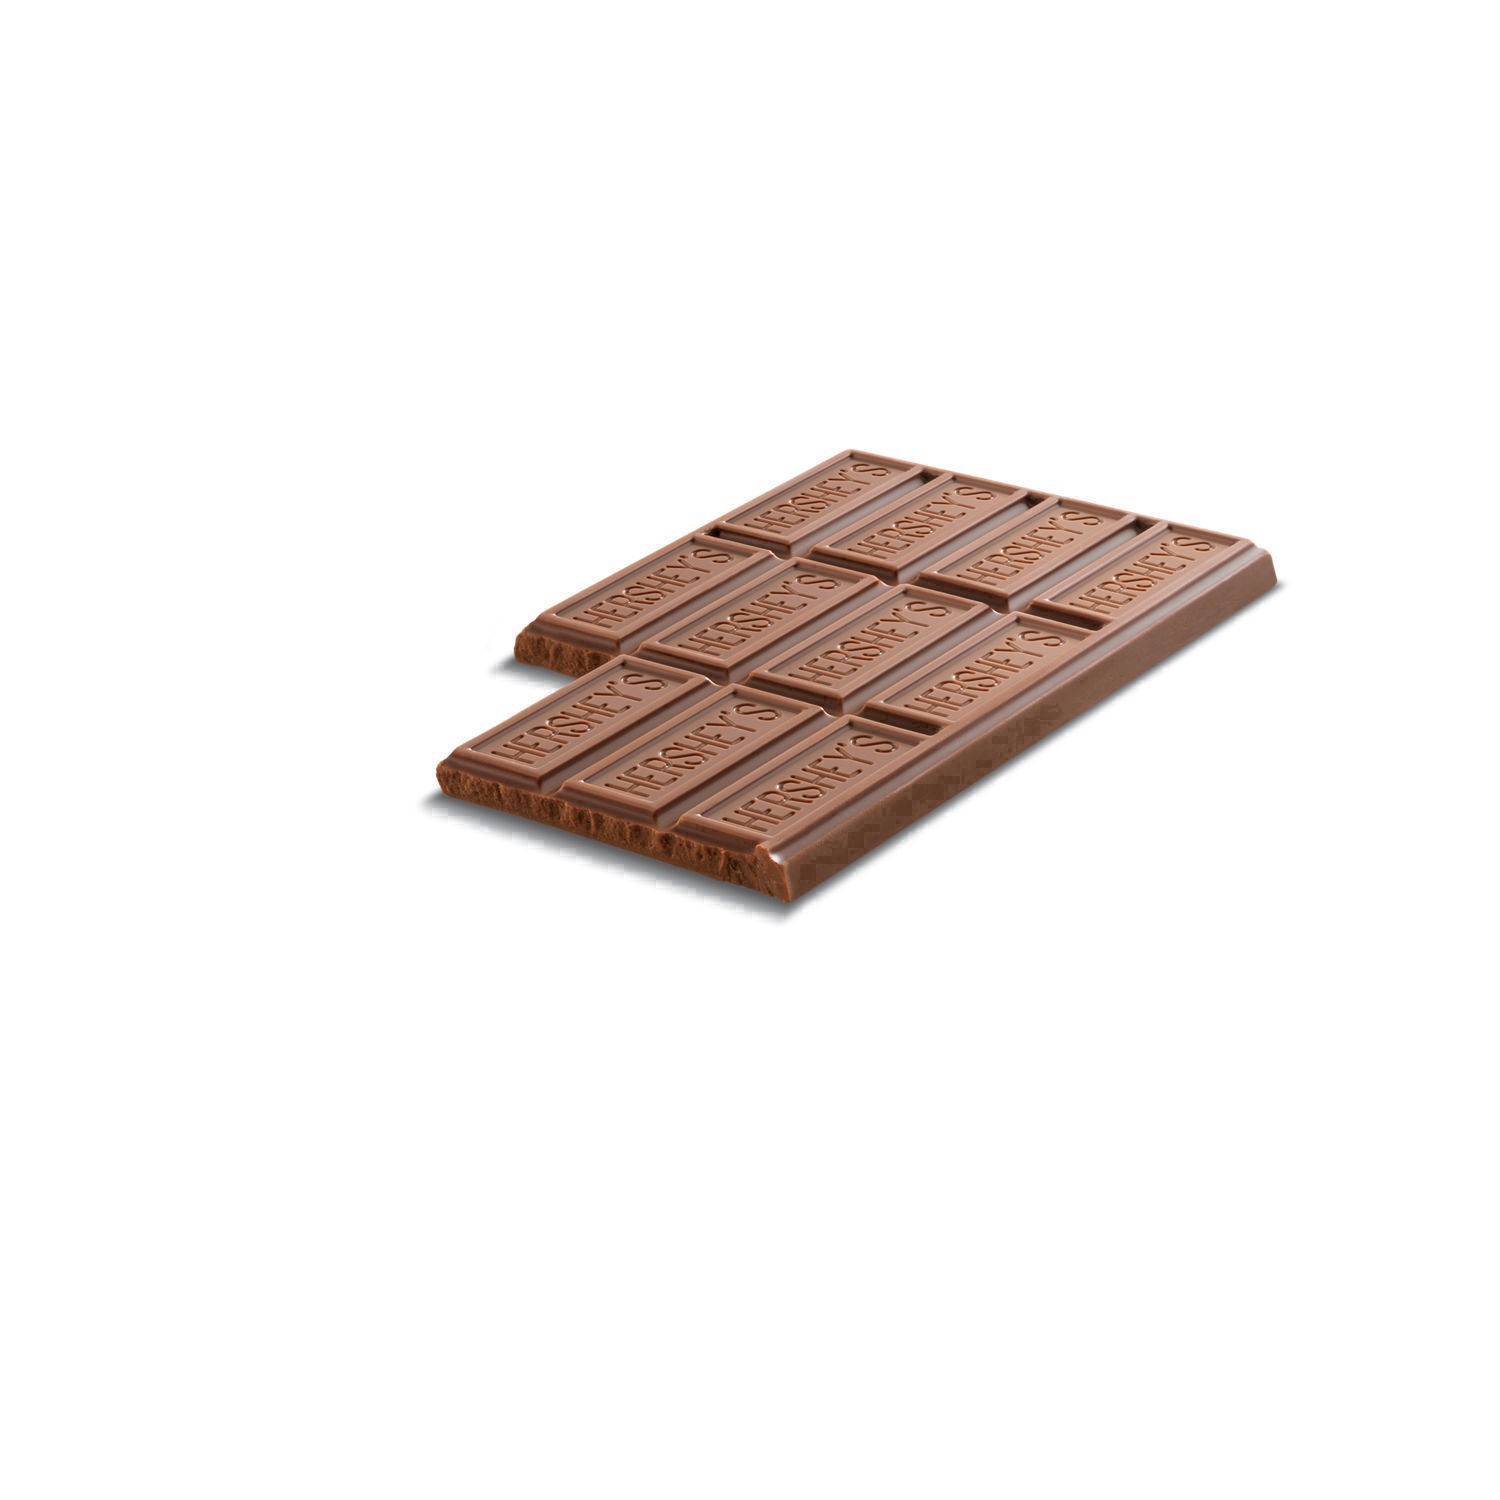 slide 15 of 68, Hershey's Milk Chocolate XL, Candy Bar, 4.4 oz (16 Pieces), 4.4 oz